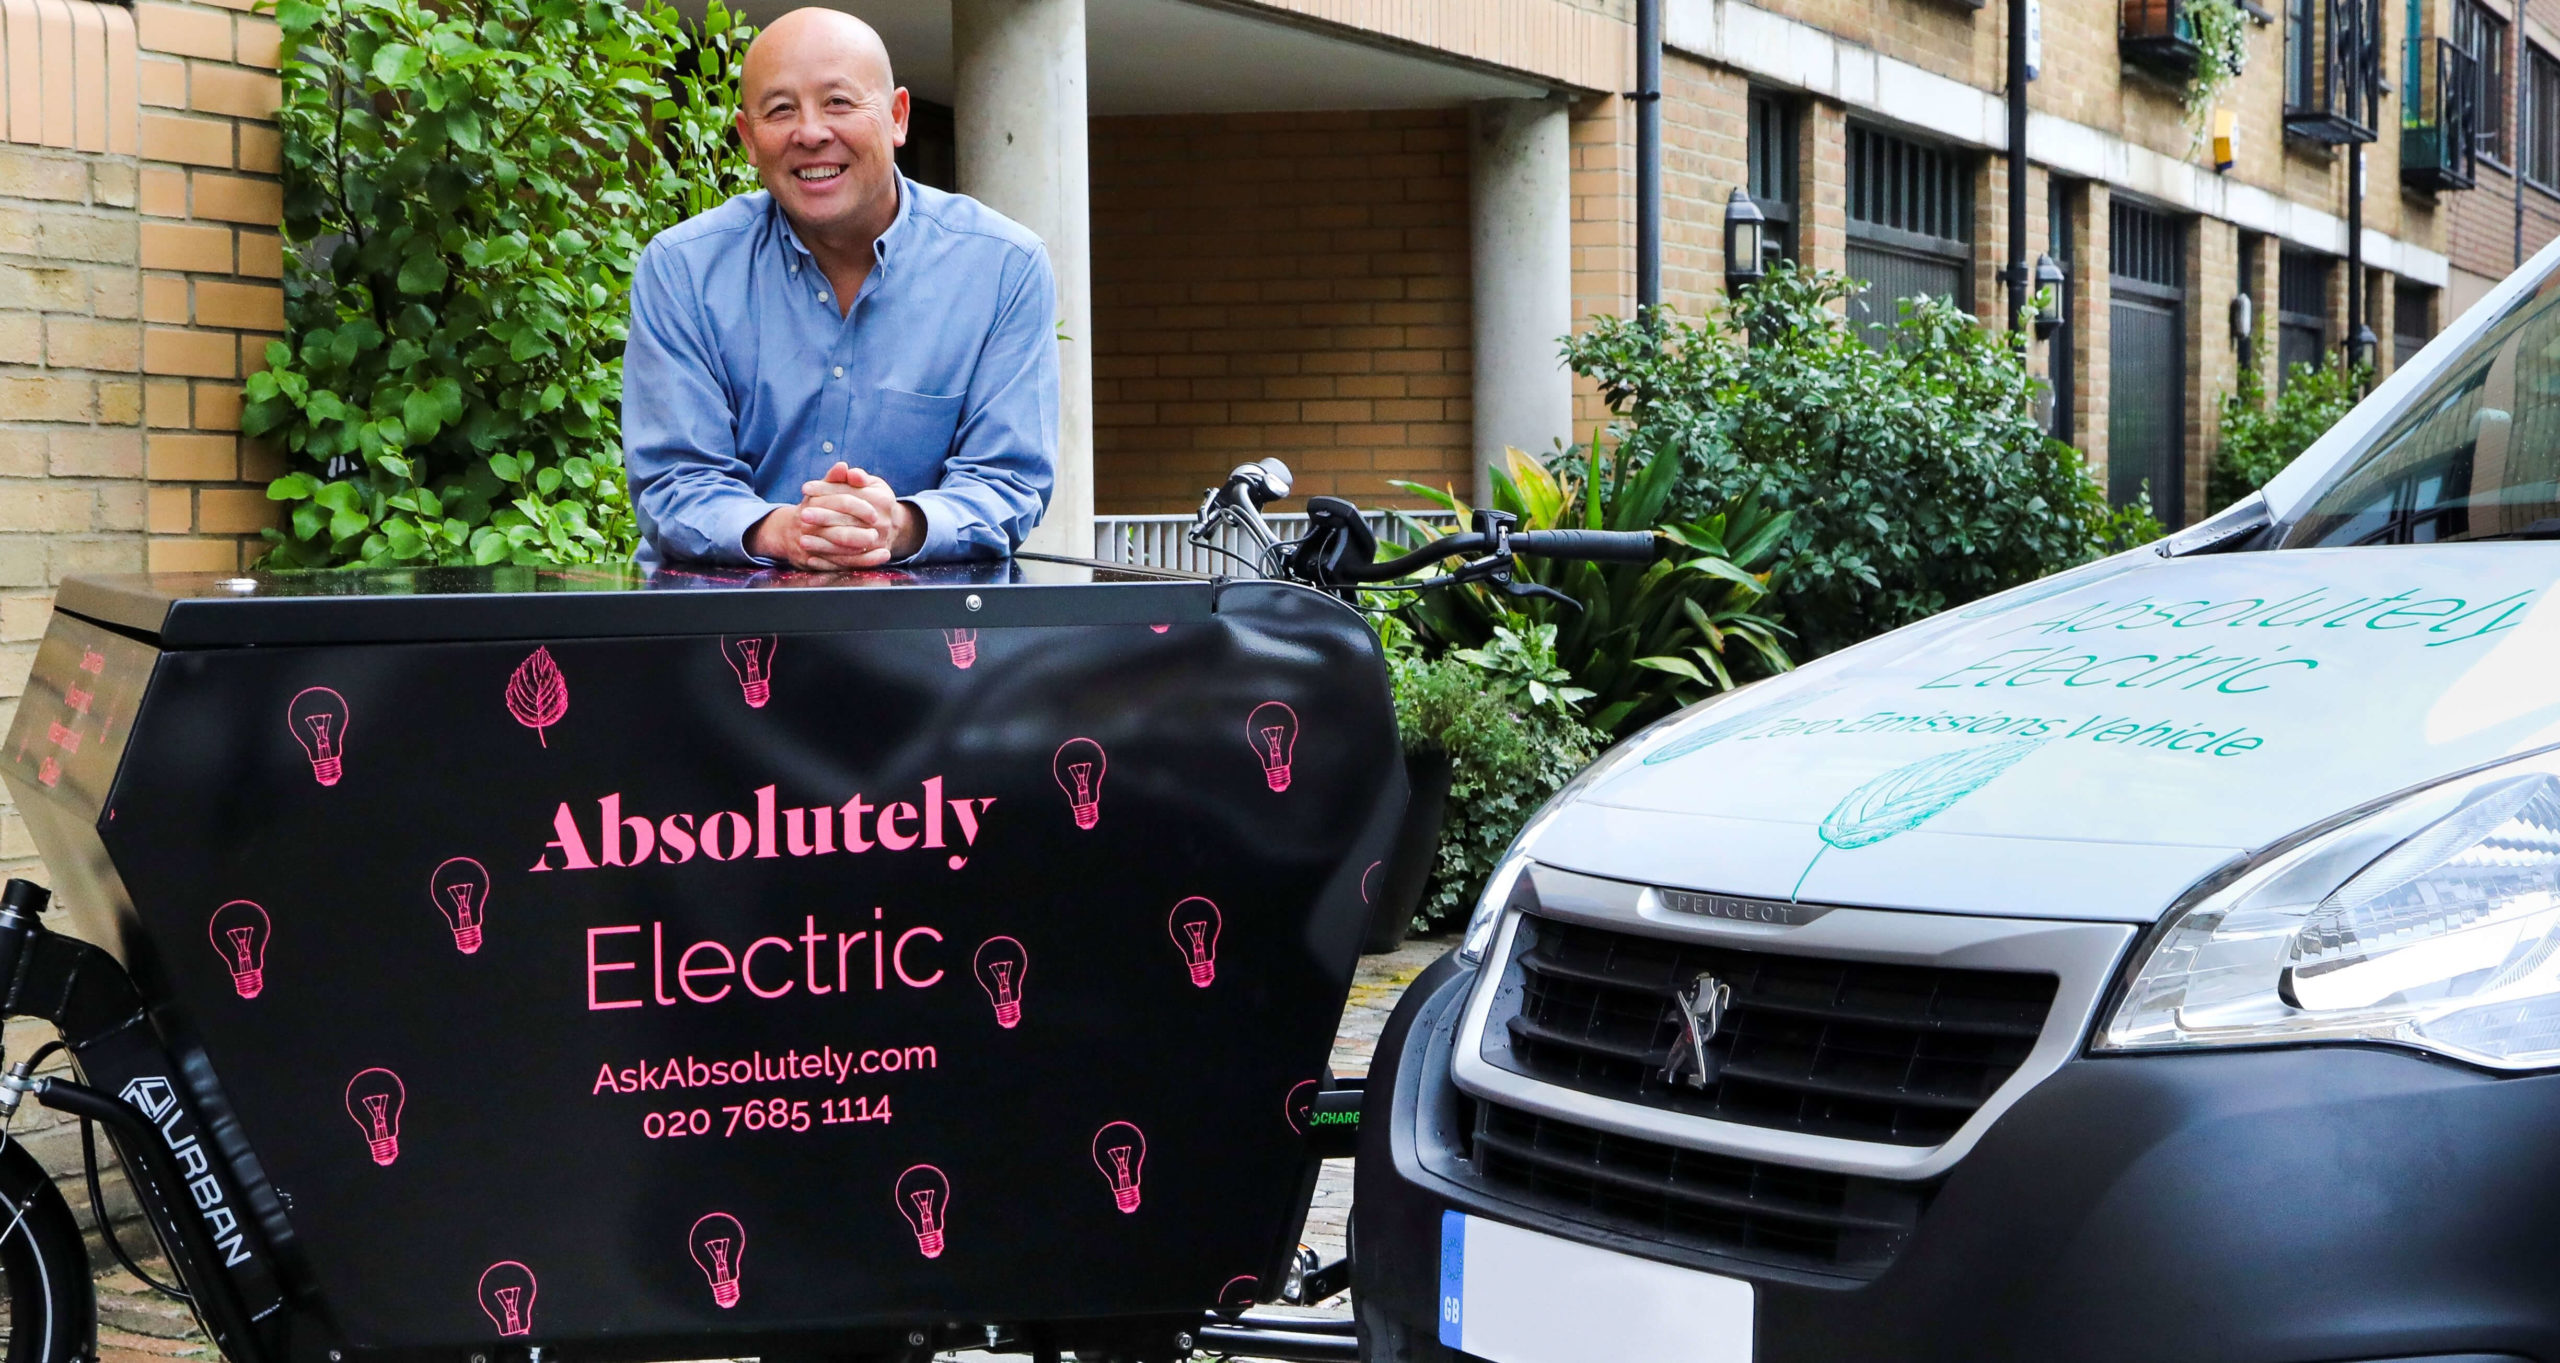 London's longest serving courier company launches eco-friendly vehicles